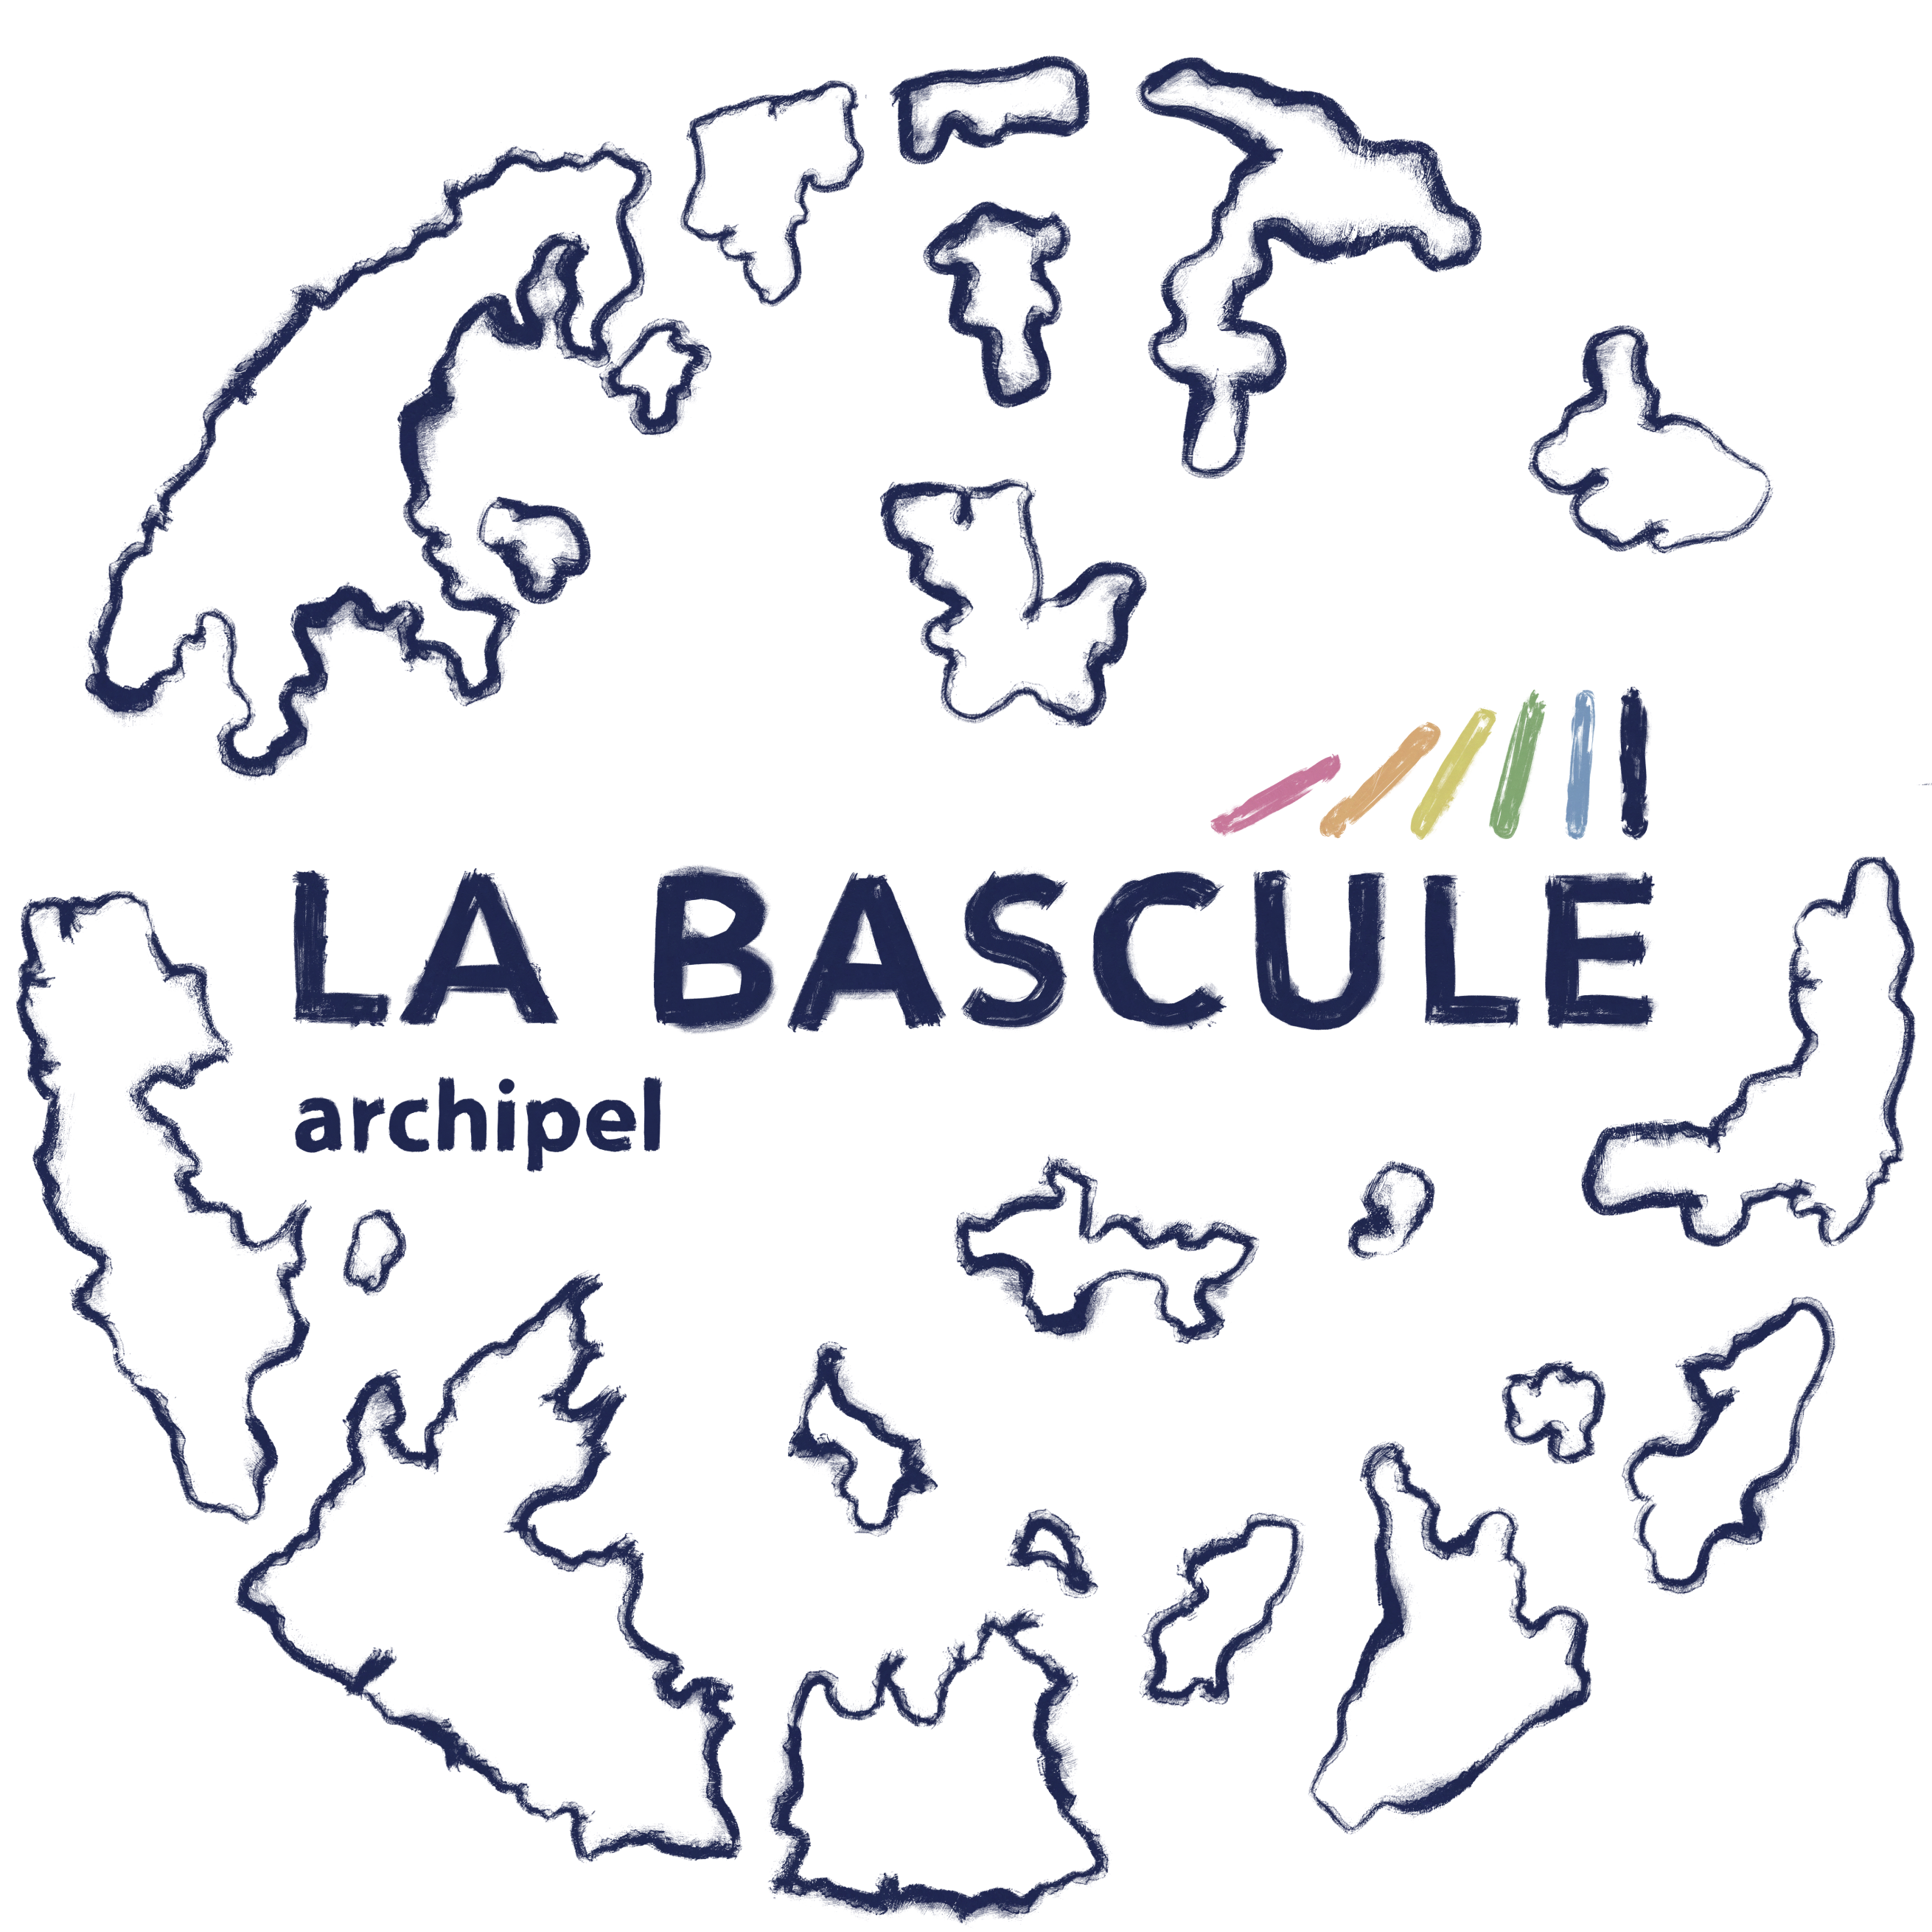 Cropped-bascule archipel logo 05.png